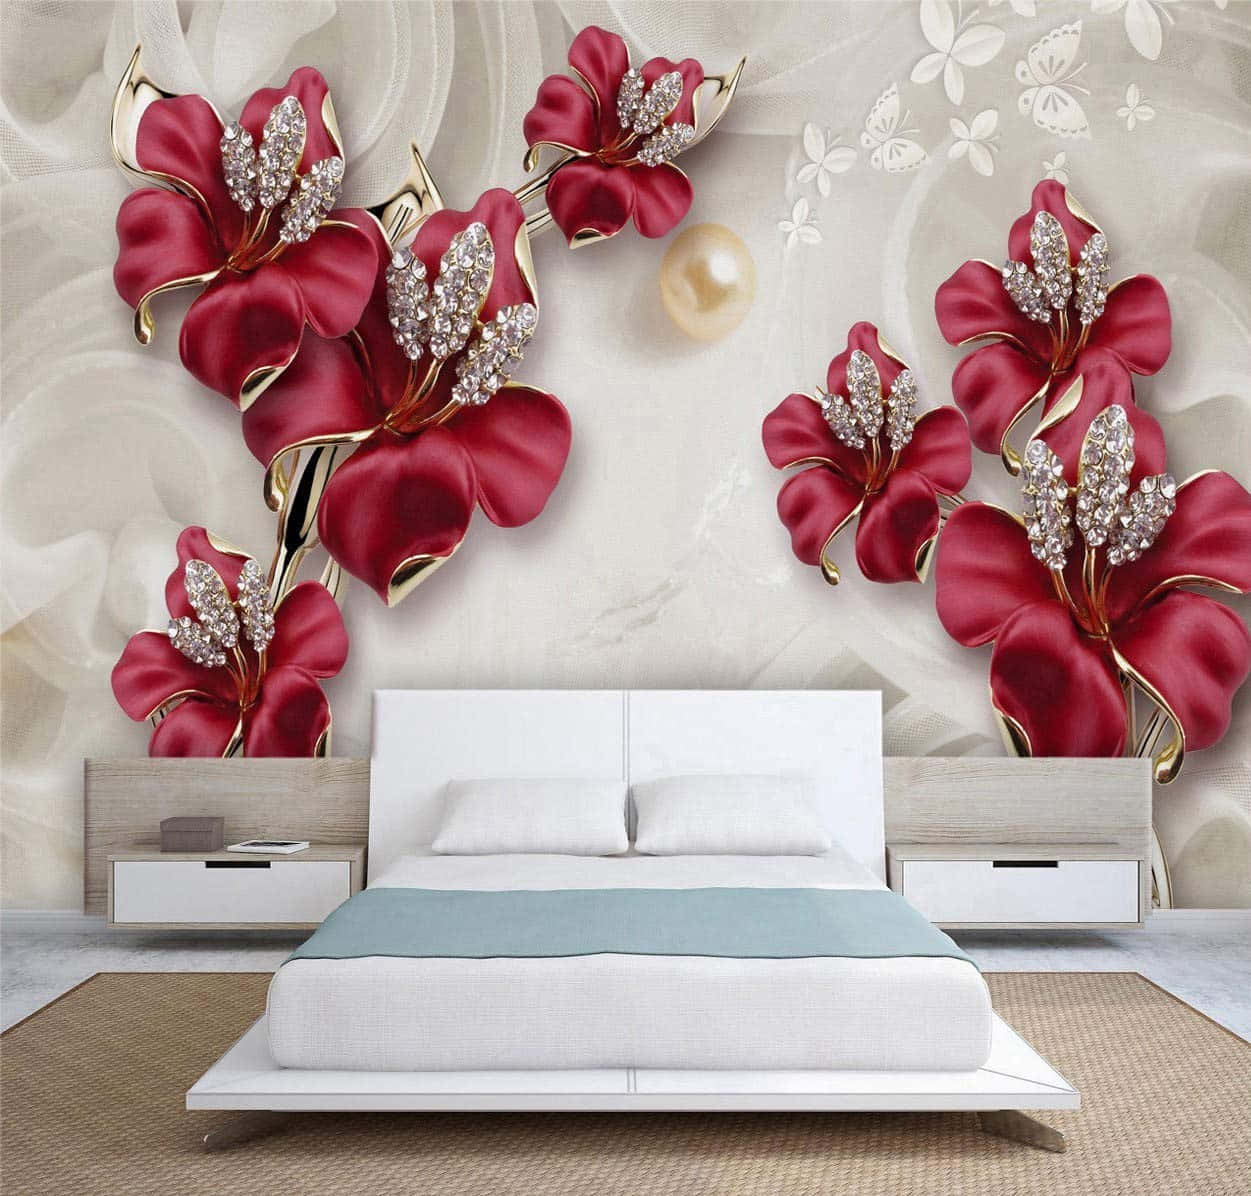 Serenity in Sleep: Elegant White Floating Bed Illuminated Amid Oversized Flowers Wallpaper